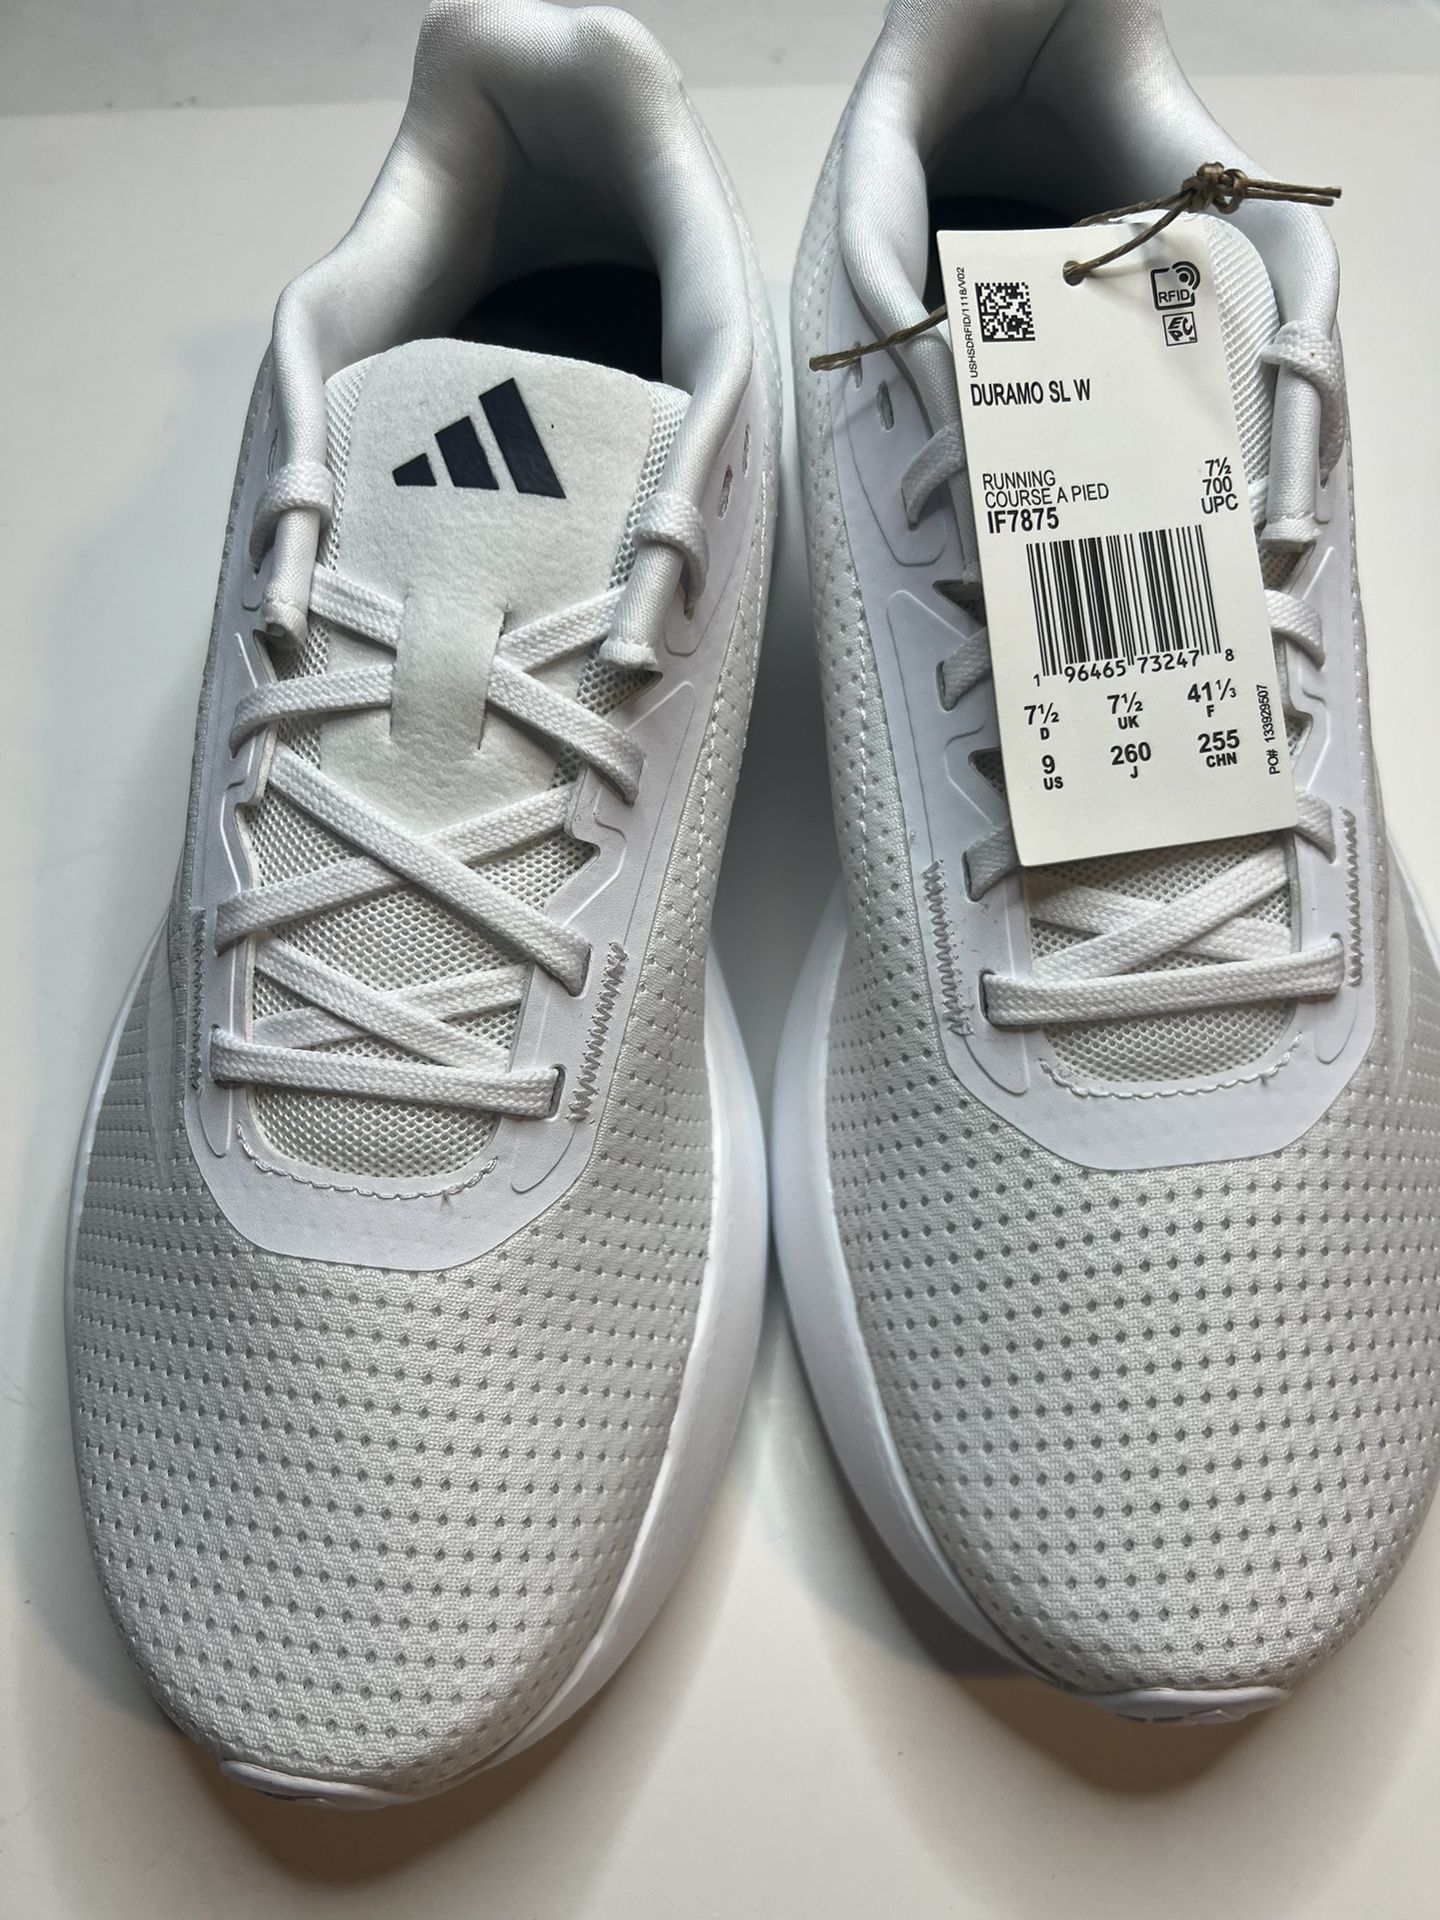 WMNS Adidas Duramo SL Size 9 